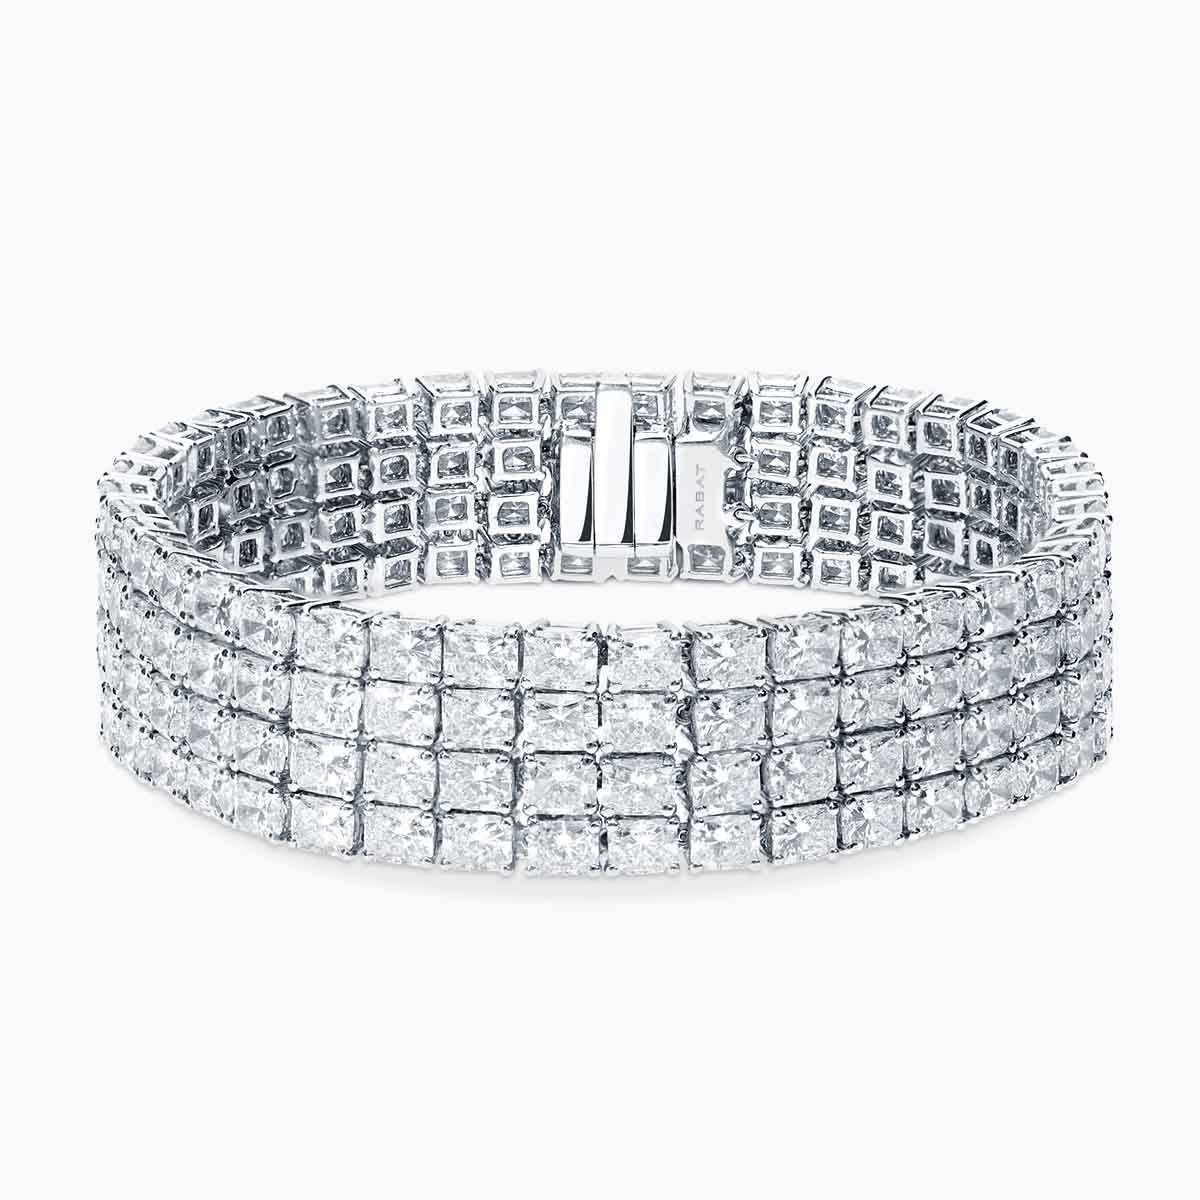 Four-row white gold riviere bracelet with diamonds